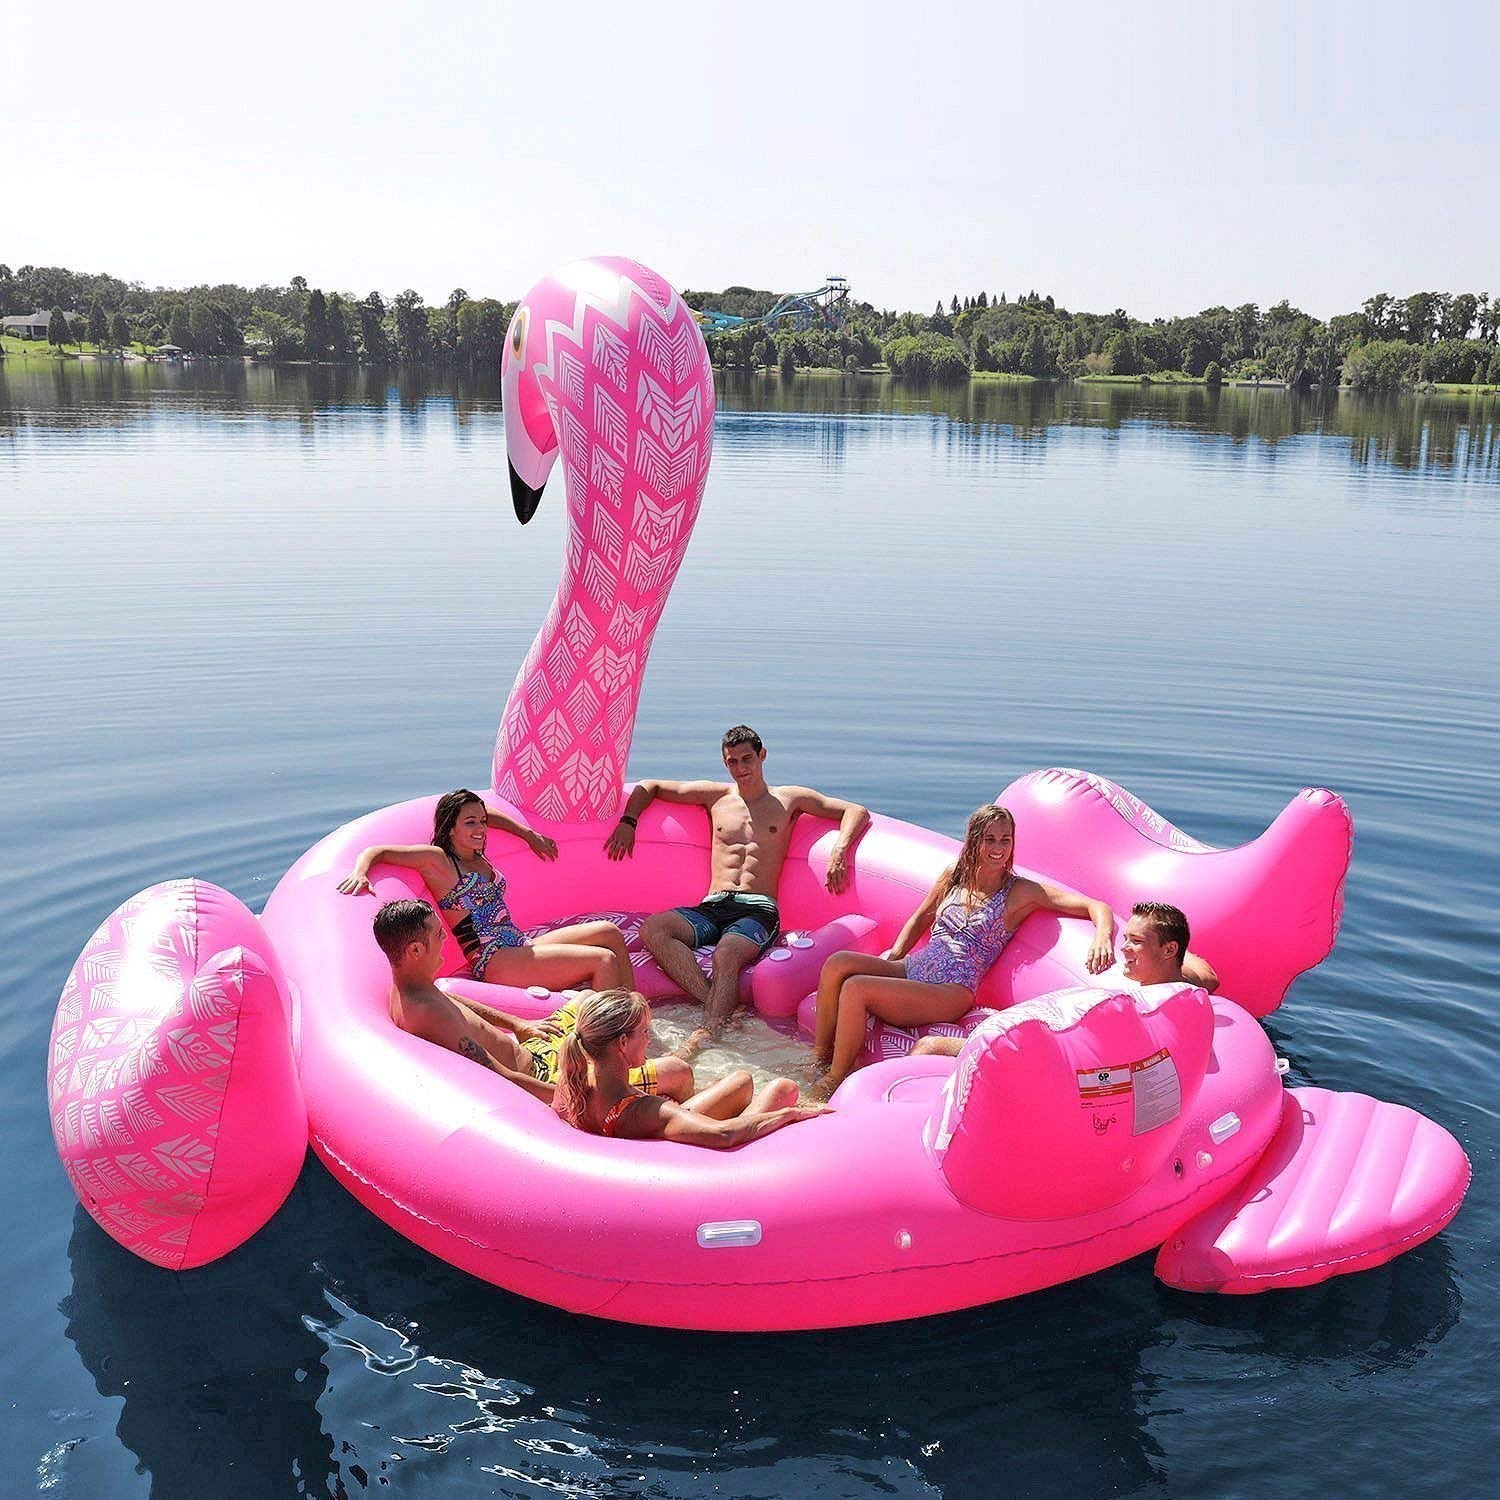 Giant Flamingo Float